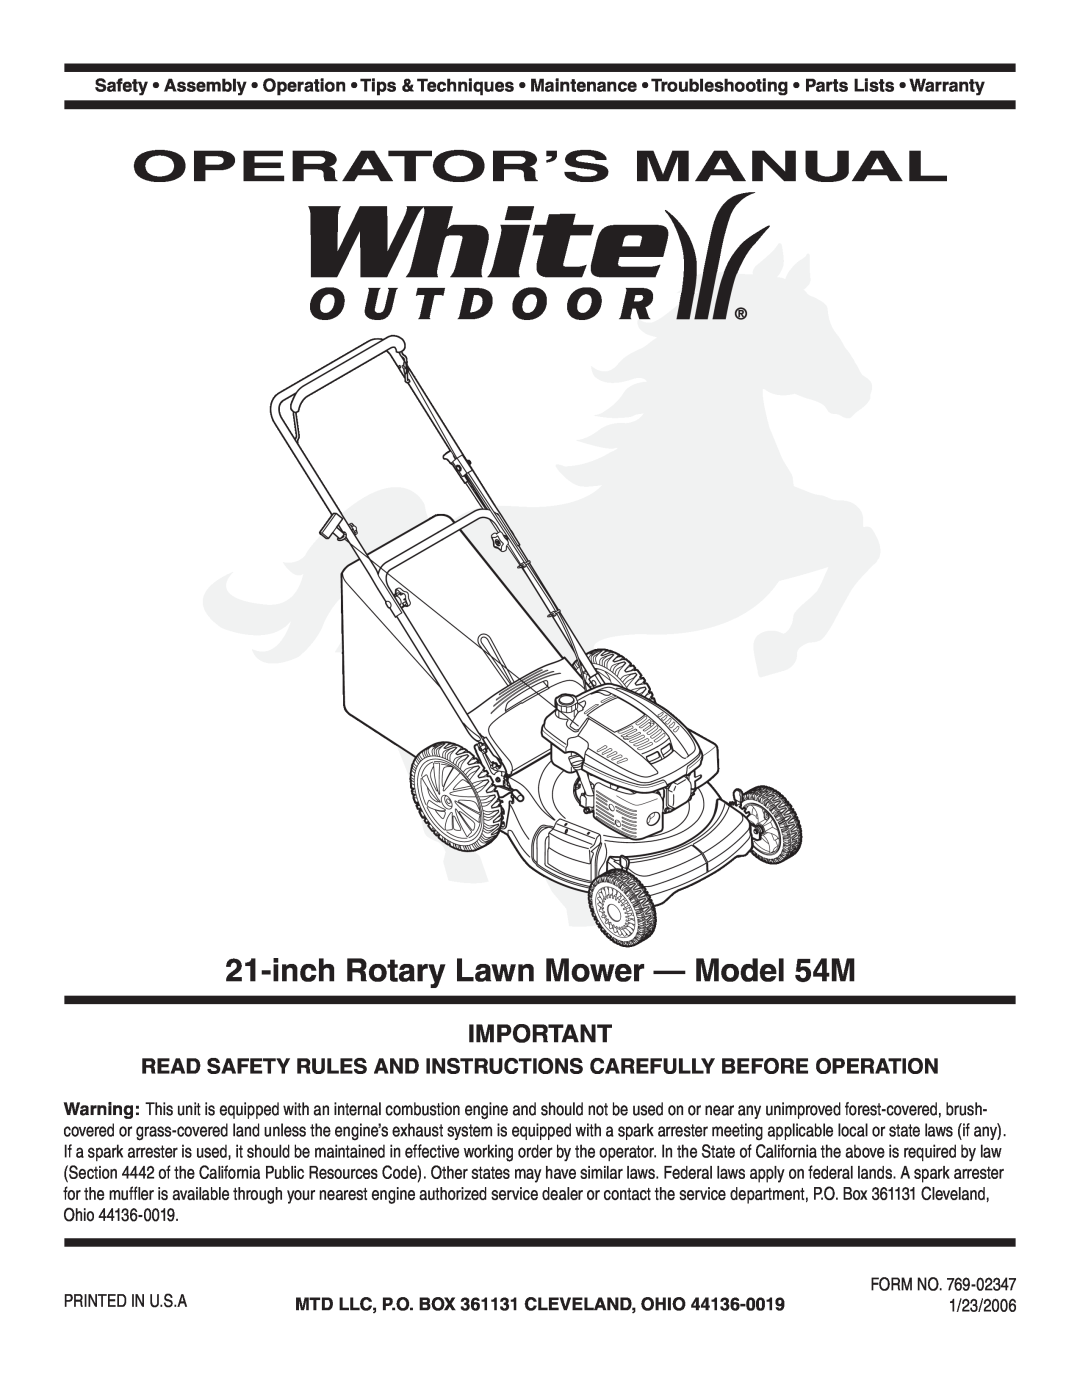 White Outdoor manual Operator’S Manual, inch Rotary Lawn Mower - Model 54M, MTD LLC, P.O. BOX 361131 CLEVELAND, OHIO 